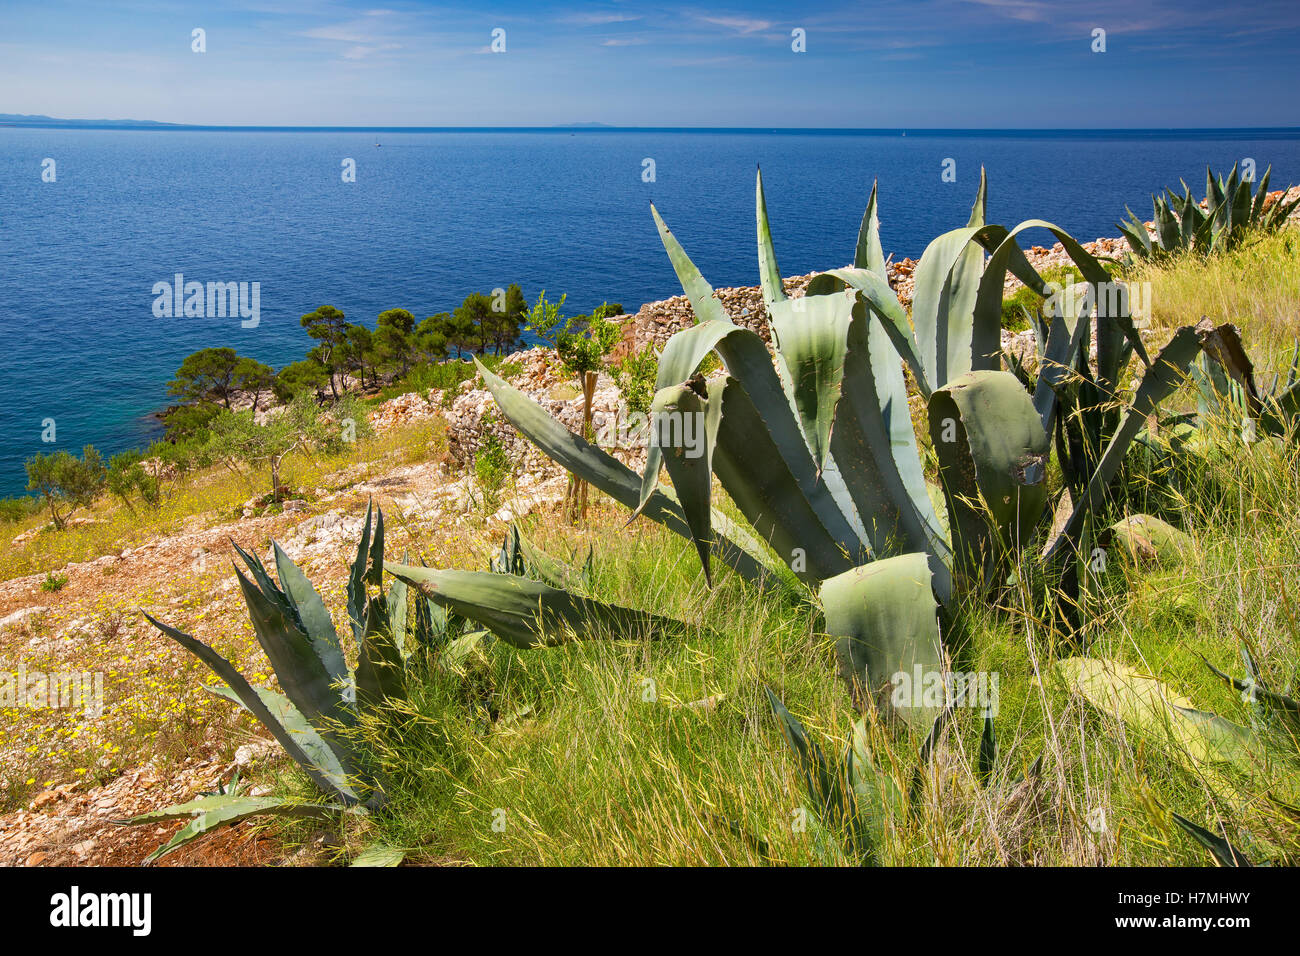 Agavenpflanzen an der Küste, nahe Dubovica. Insel Hvar, Kroatien. Adria. Europa. Stockfoto